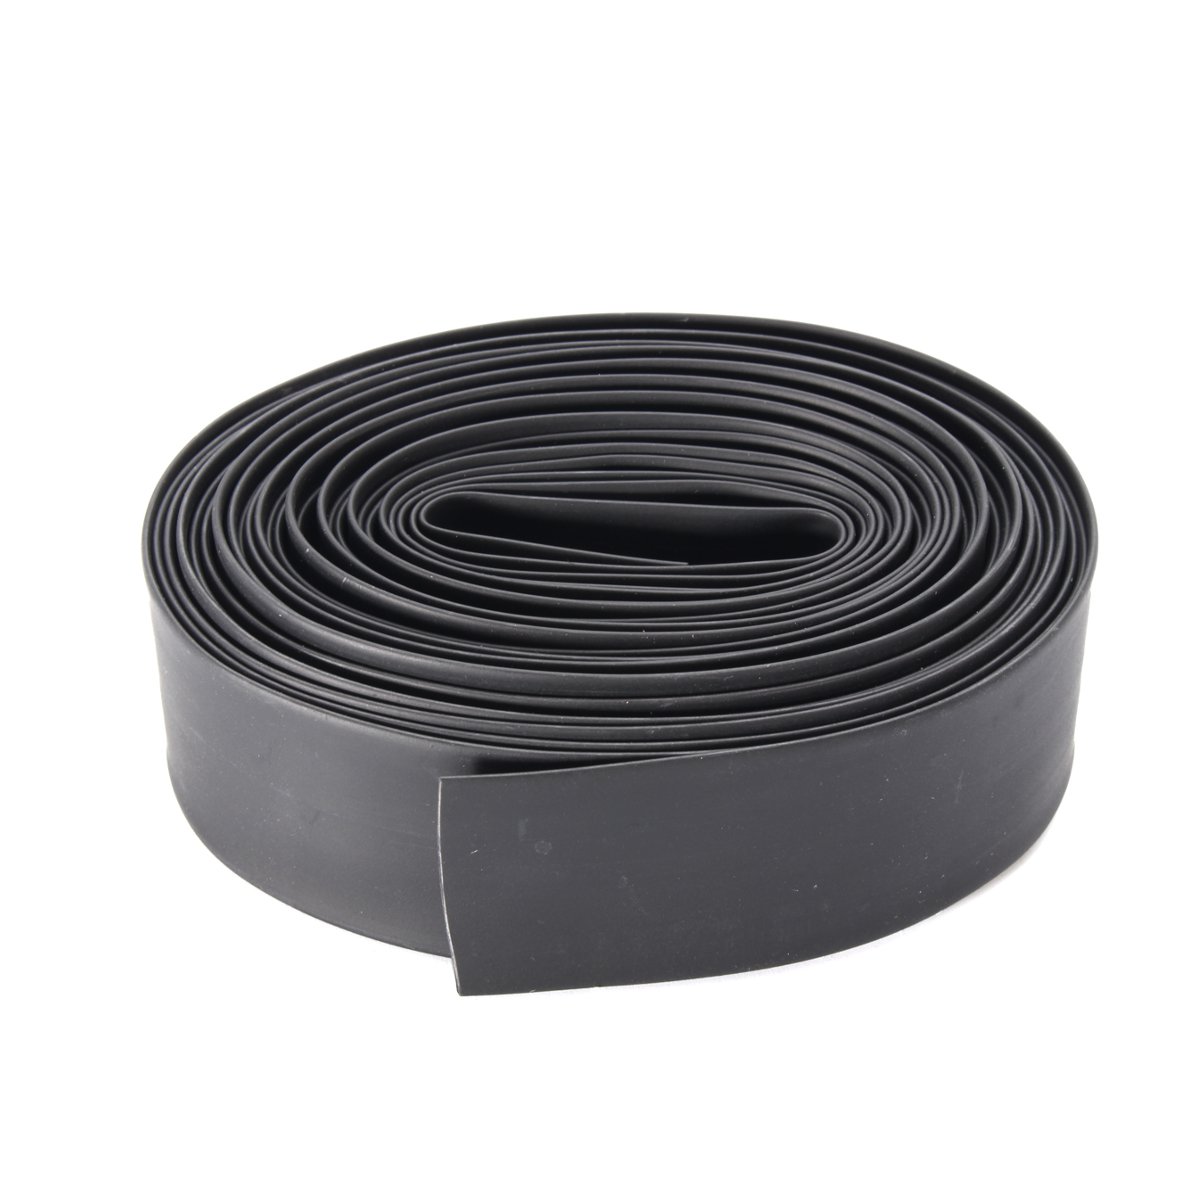 20mm Black Heat Shrinkable Tube Shrink Tubing Sleeve Cable Wrap 1m M1C5 3X